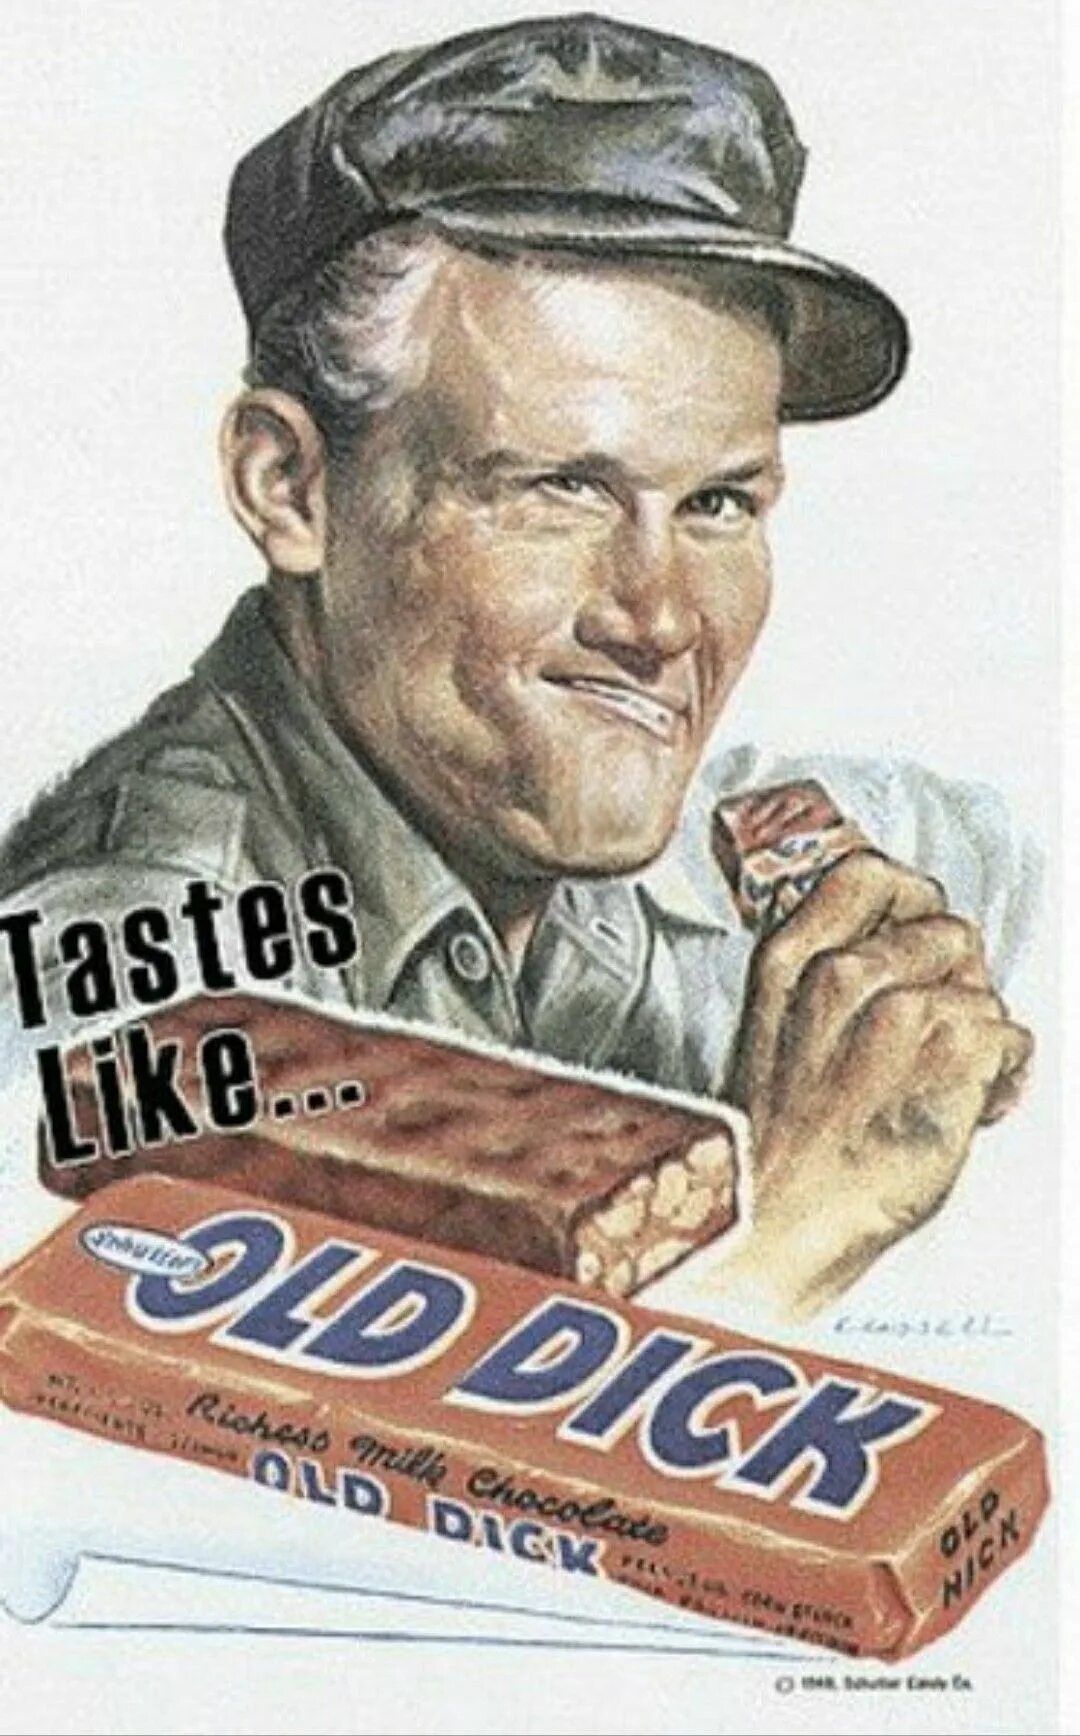 Dick taste